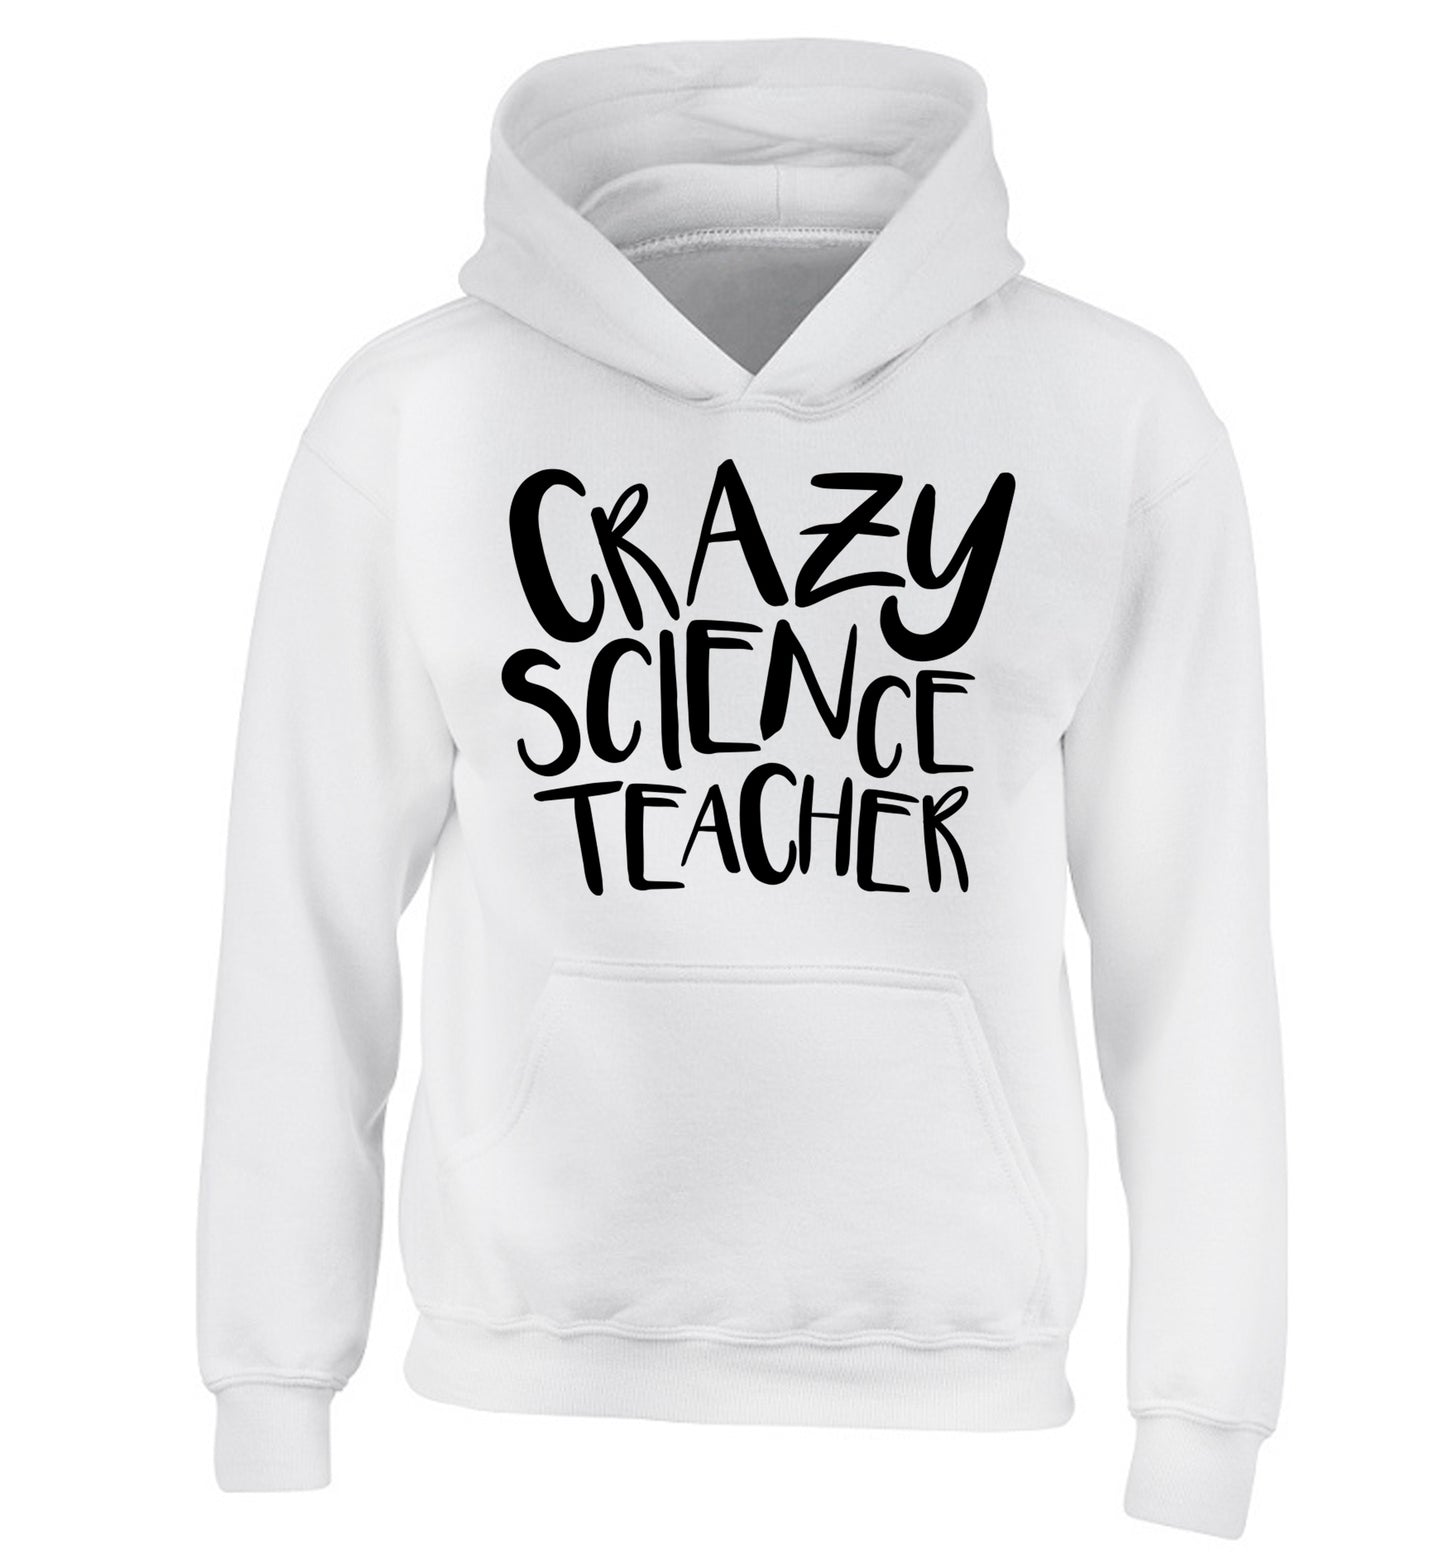 Crazy science teacher children's white hoodie 12-13 Years